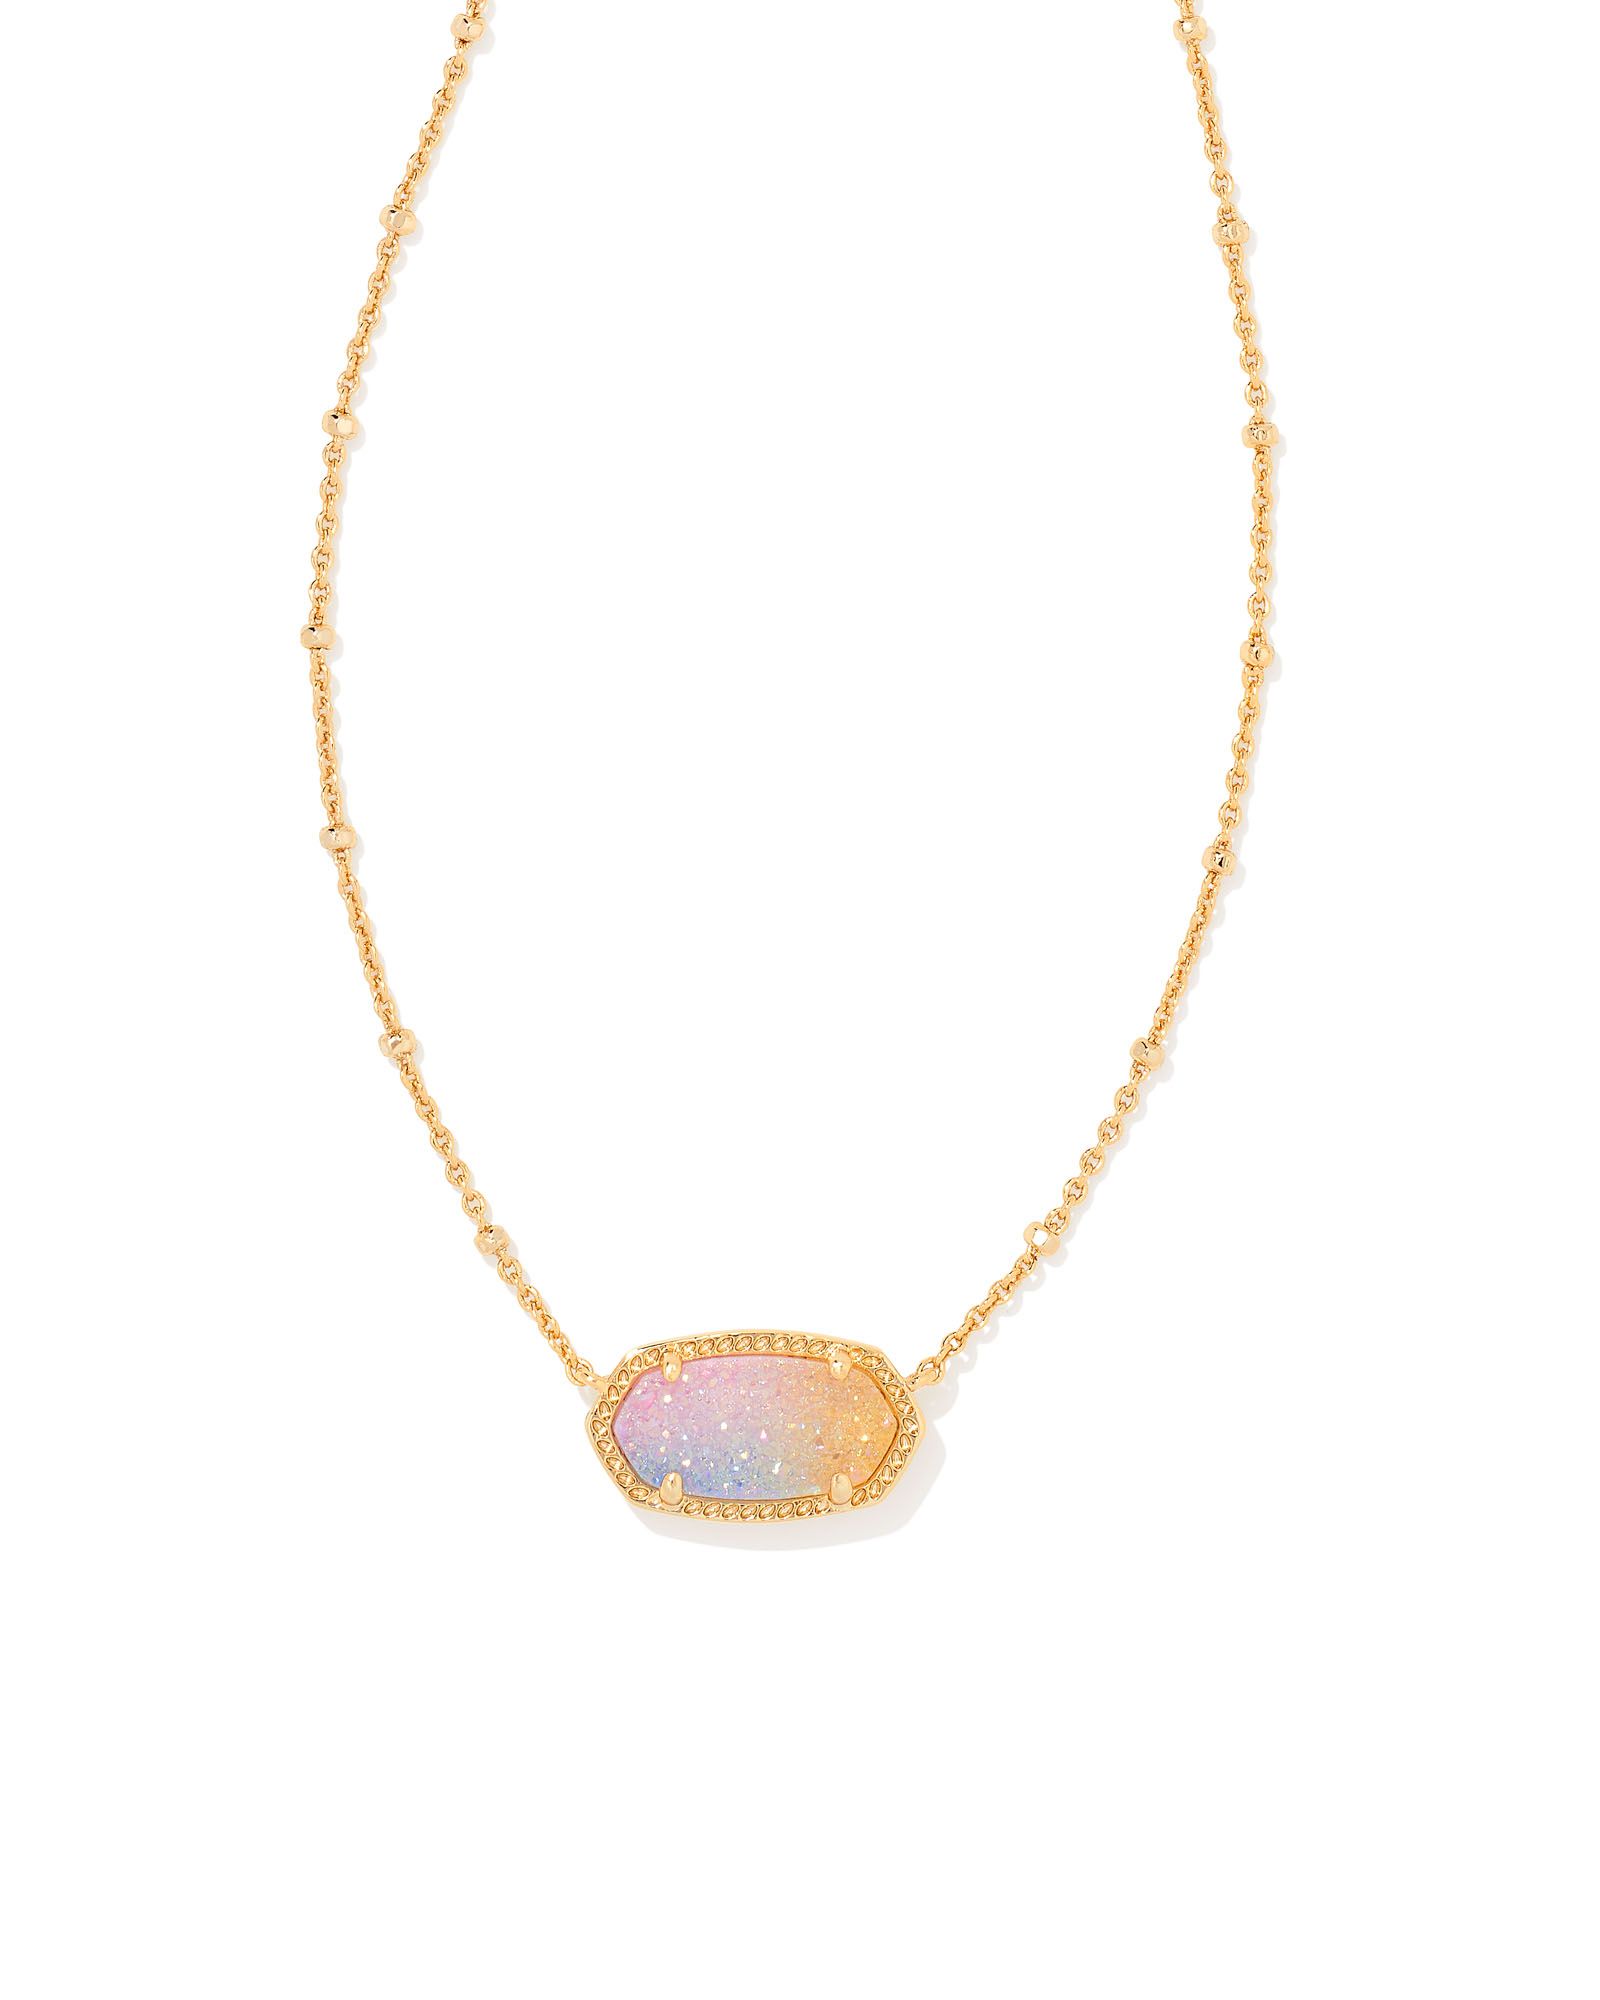 Elisa Gold Satellite Pendant Necklace in Pink Watercolor Drusy | Kendra Scott | Kendra Scott